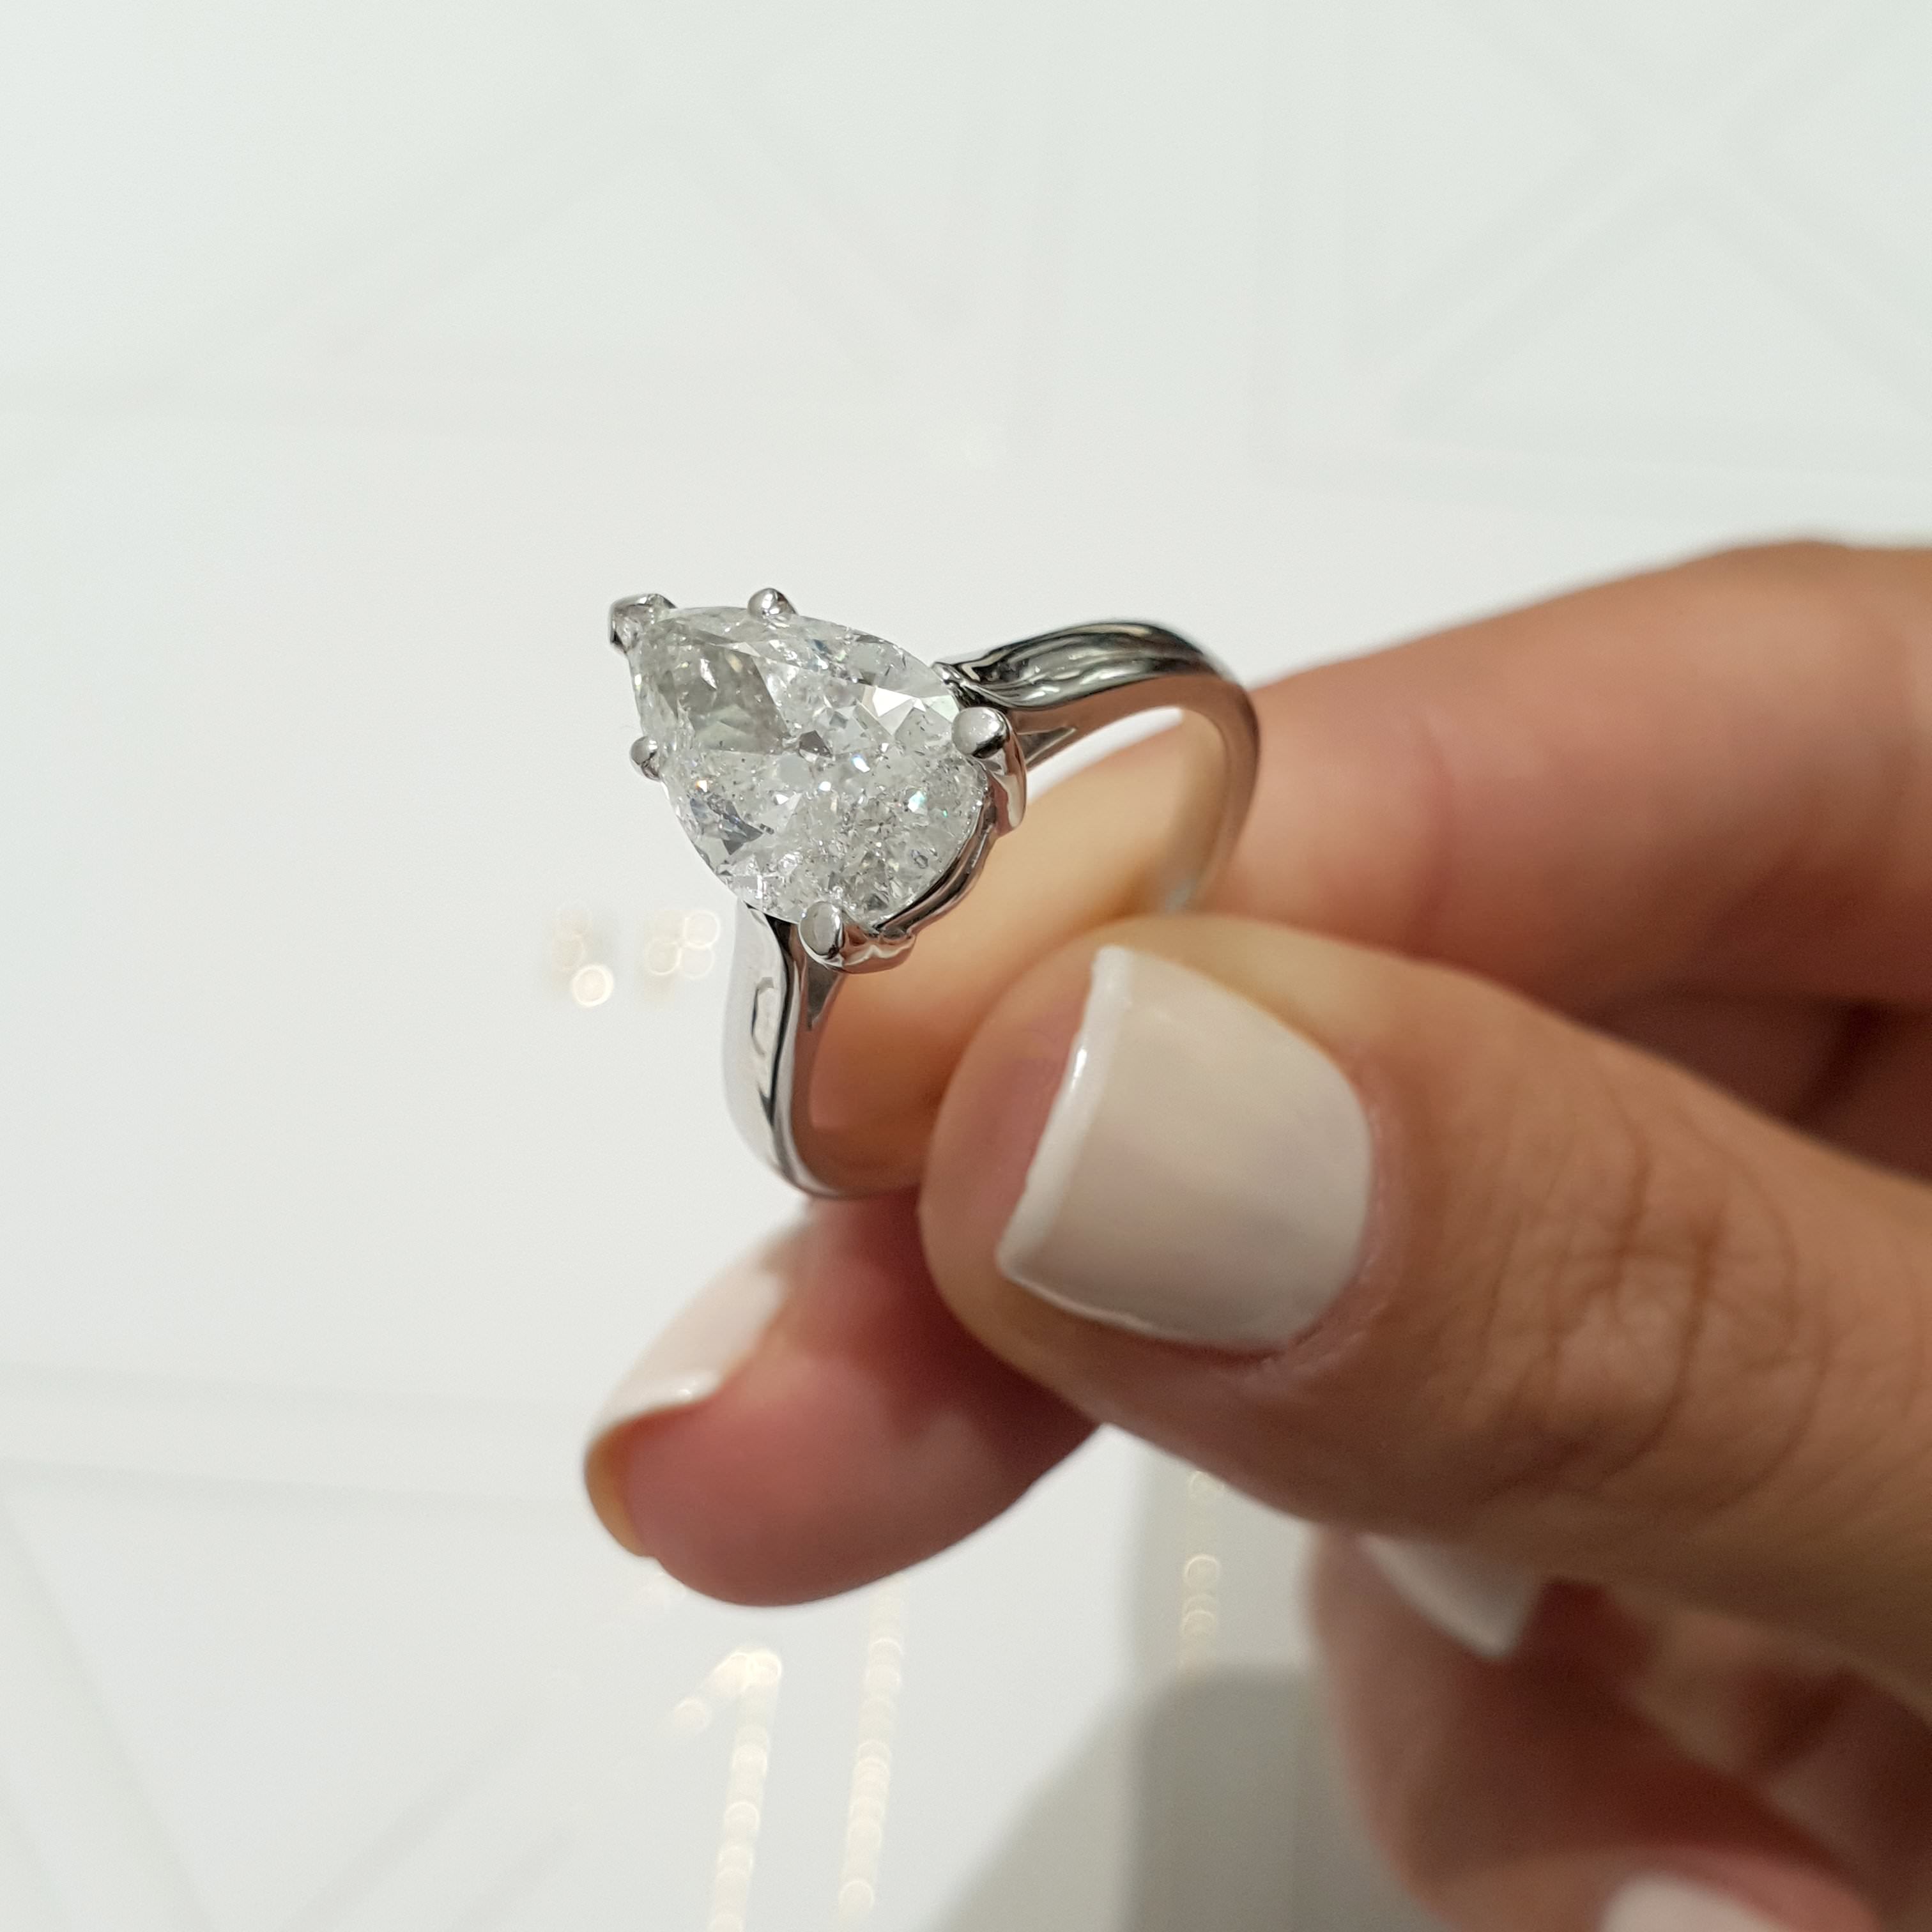 Jessica Diamond Engagement Ring -18K White Gold